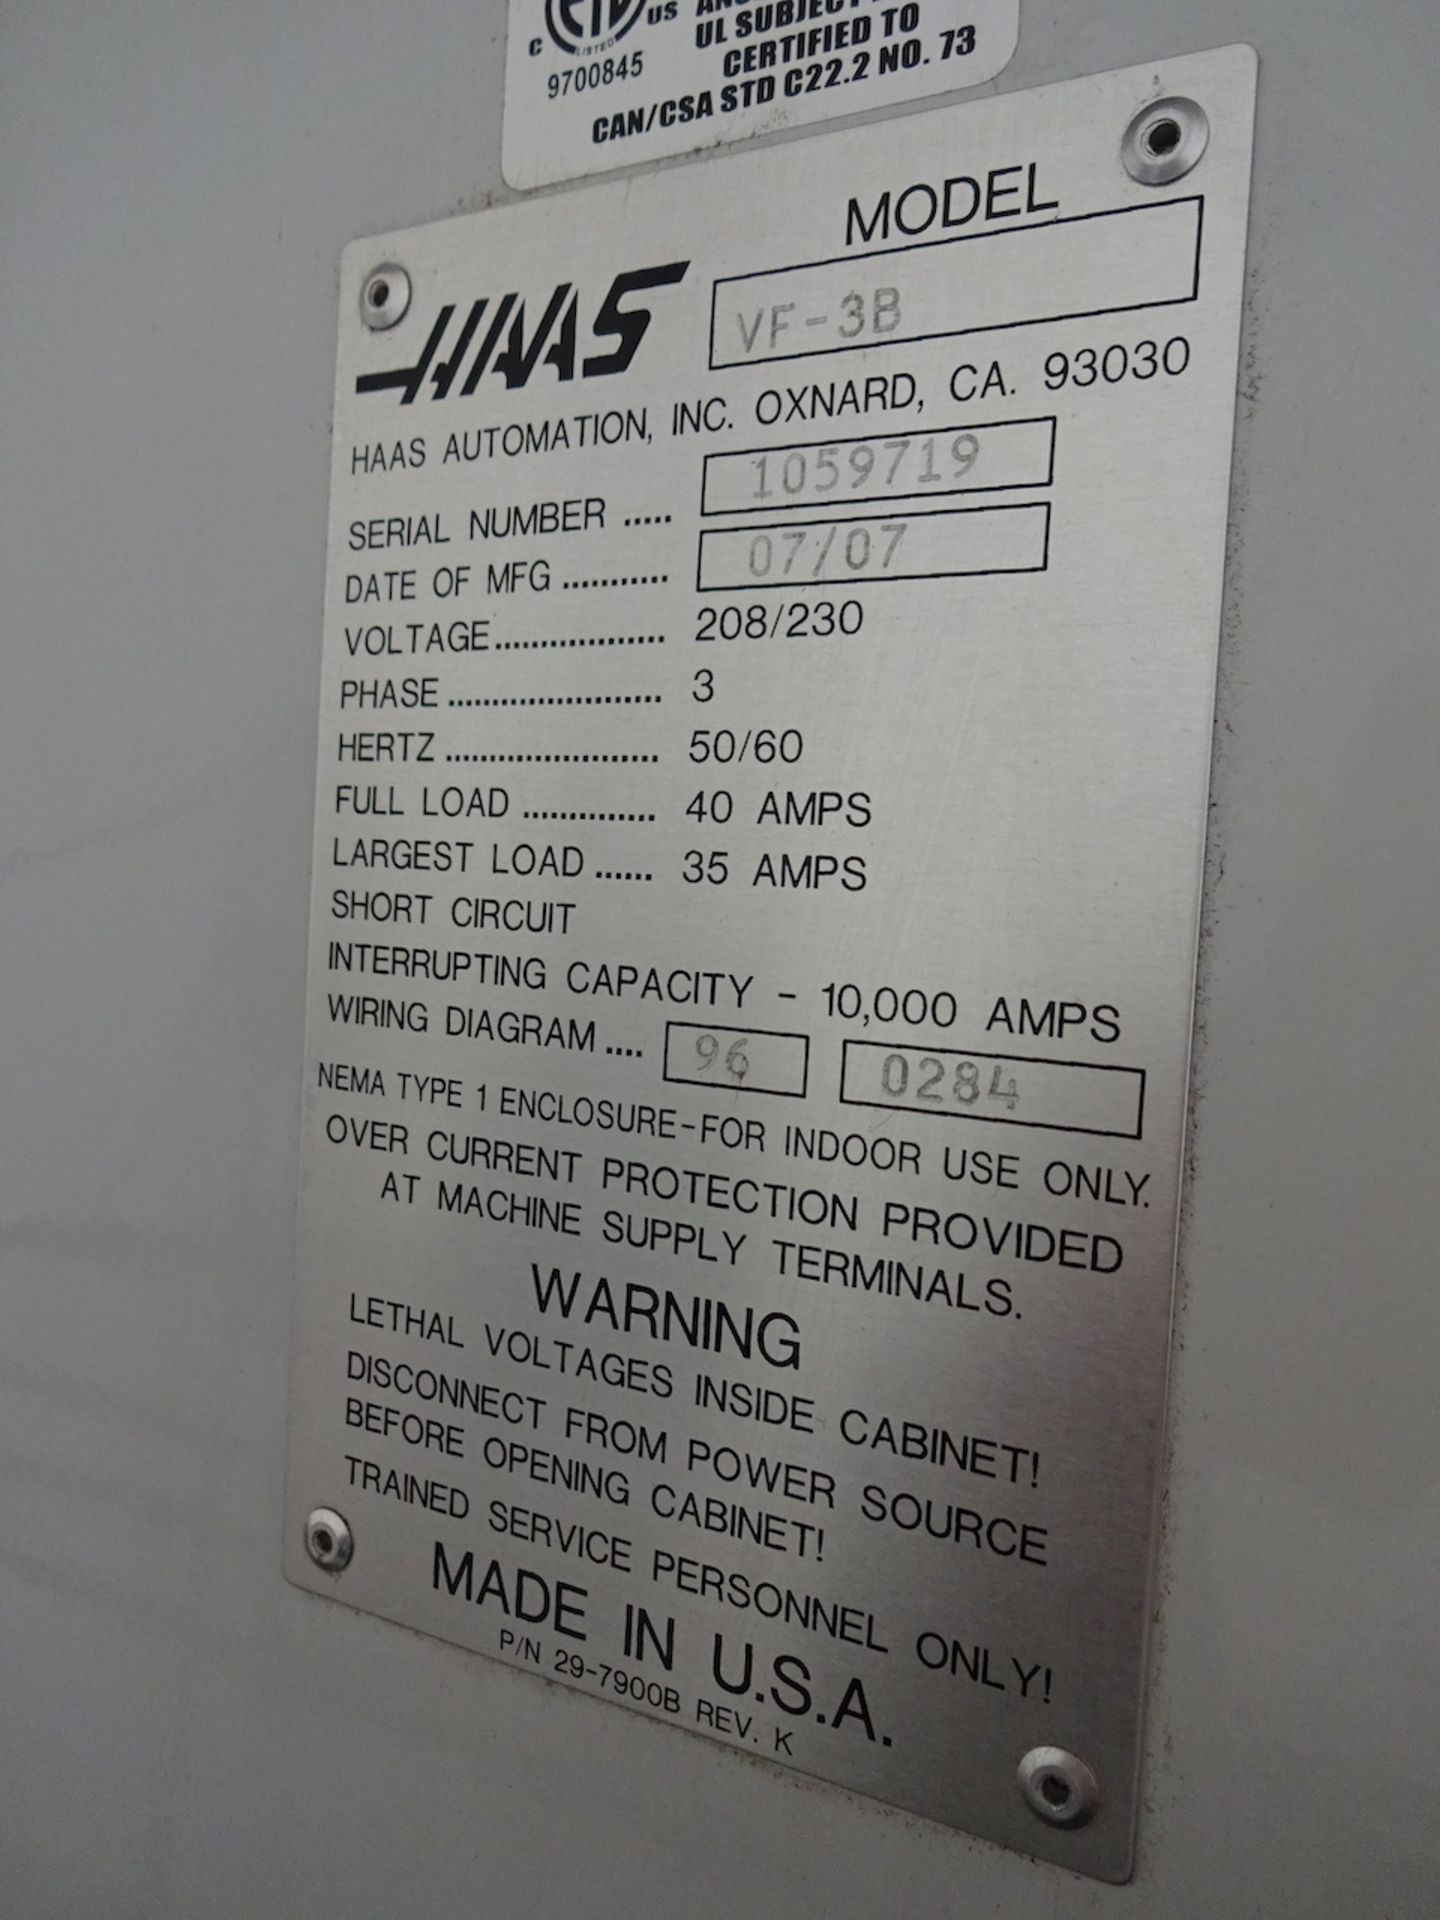 2007 HAAS MODEL VF-3B CNC VERTICAL MACHINING CENTER: S/N 1059719, - Image 15 of 21